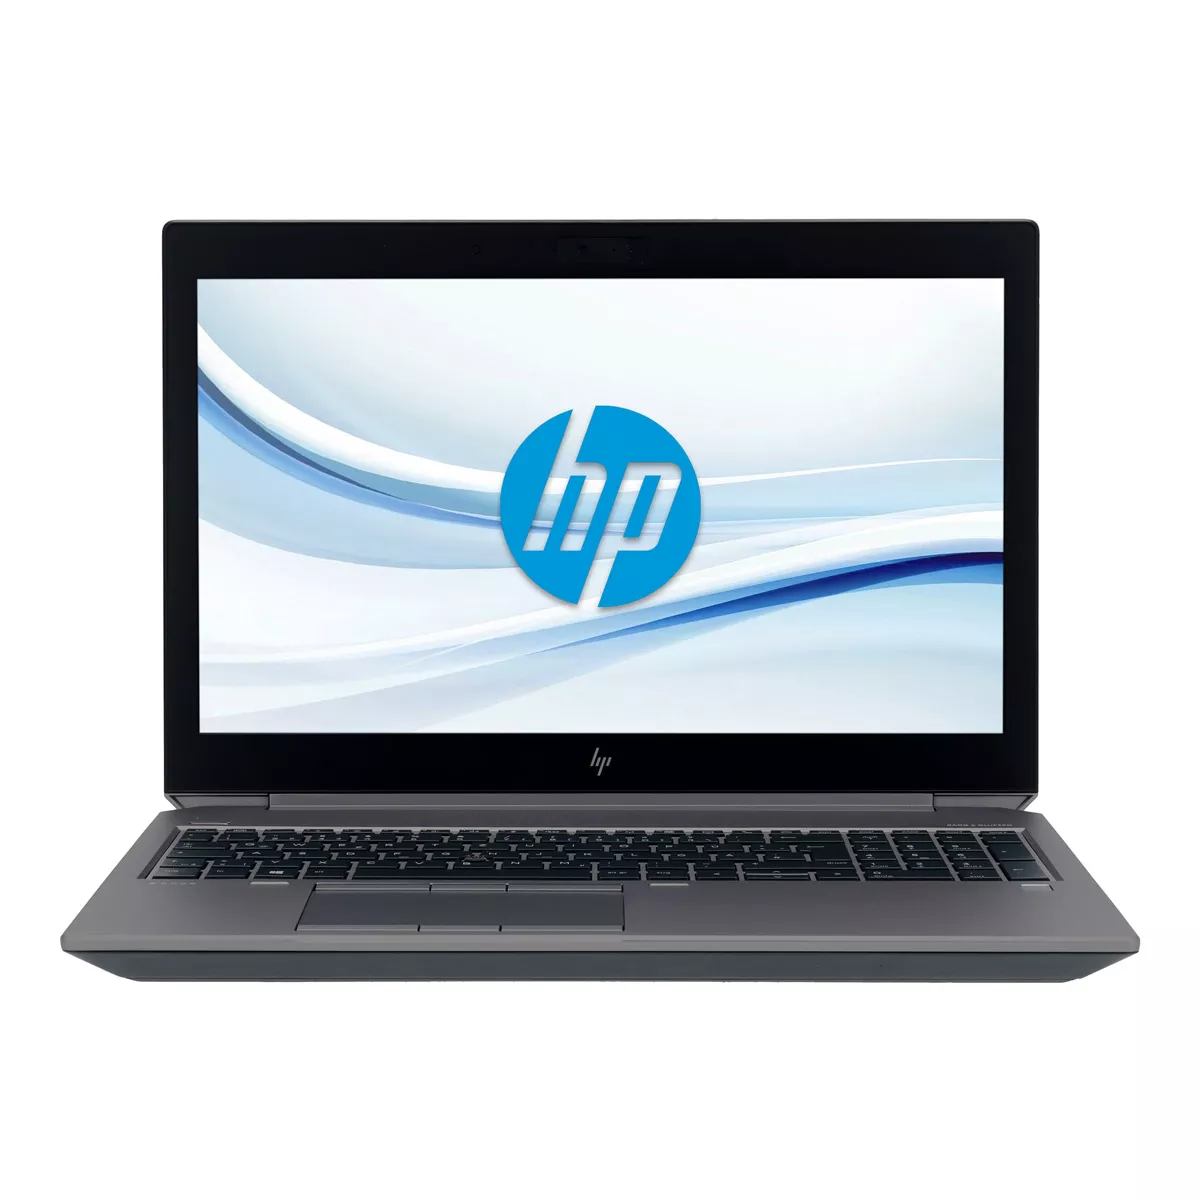 HP ZBook 15 G5 Core i7 8850H nVidia Quadro P2000M 16 GB 240 GB M.2 SSD Webcam B